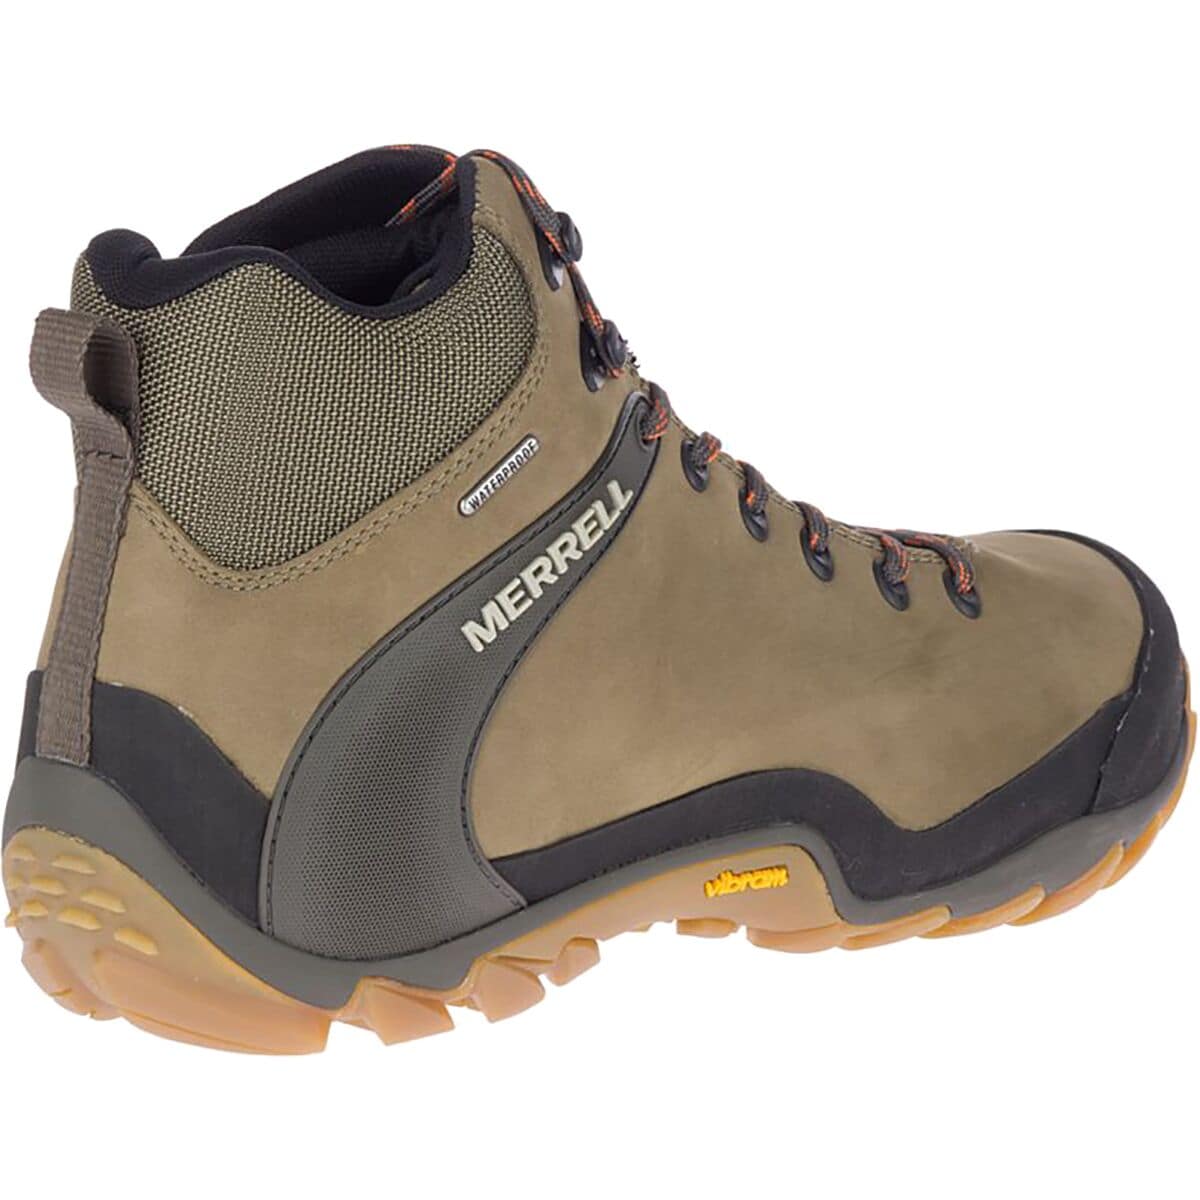 Merrell Chameleon 8 Leather Mid Waterproof Boot - Men's - Footwear